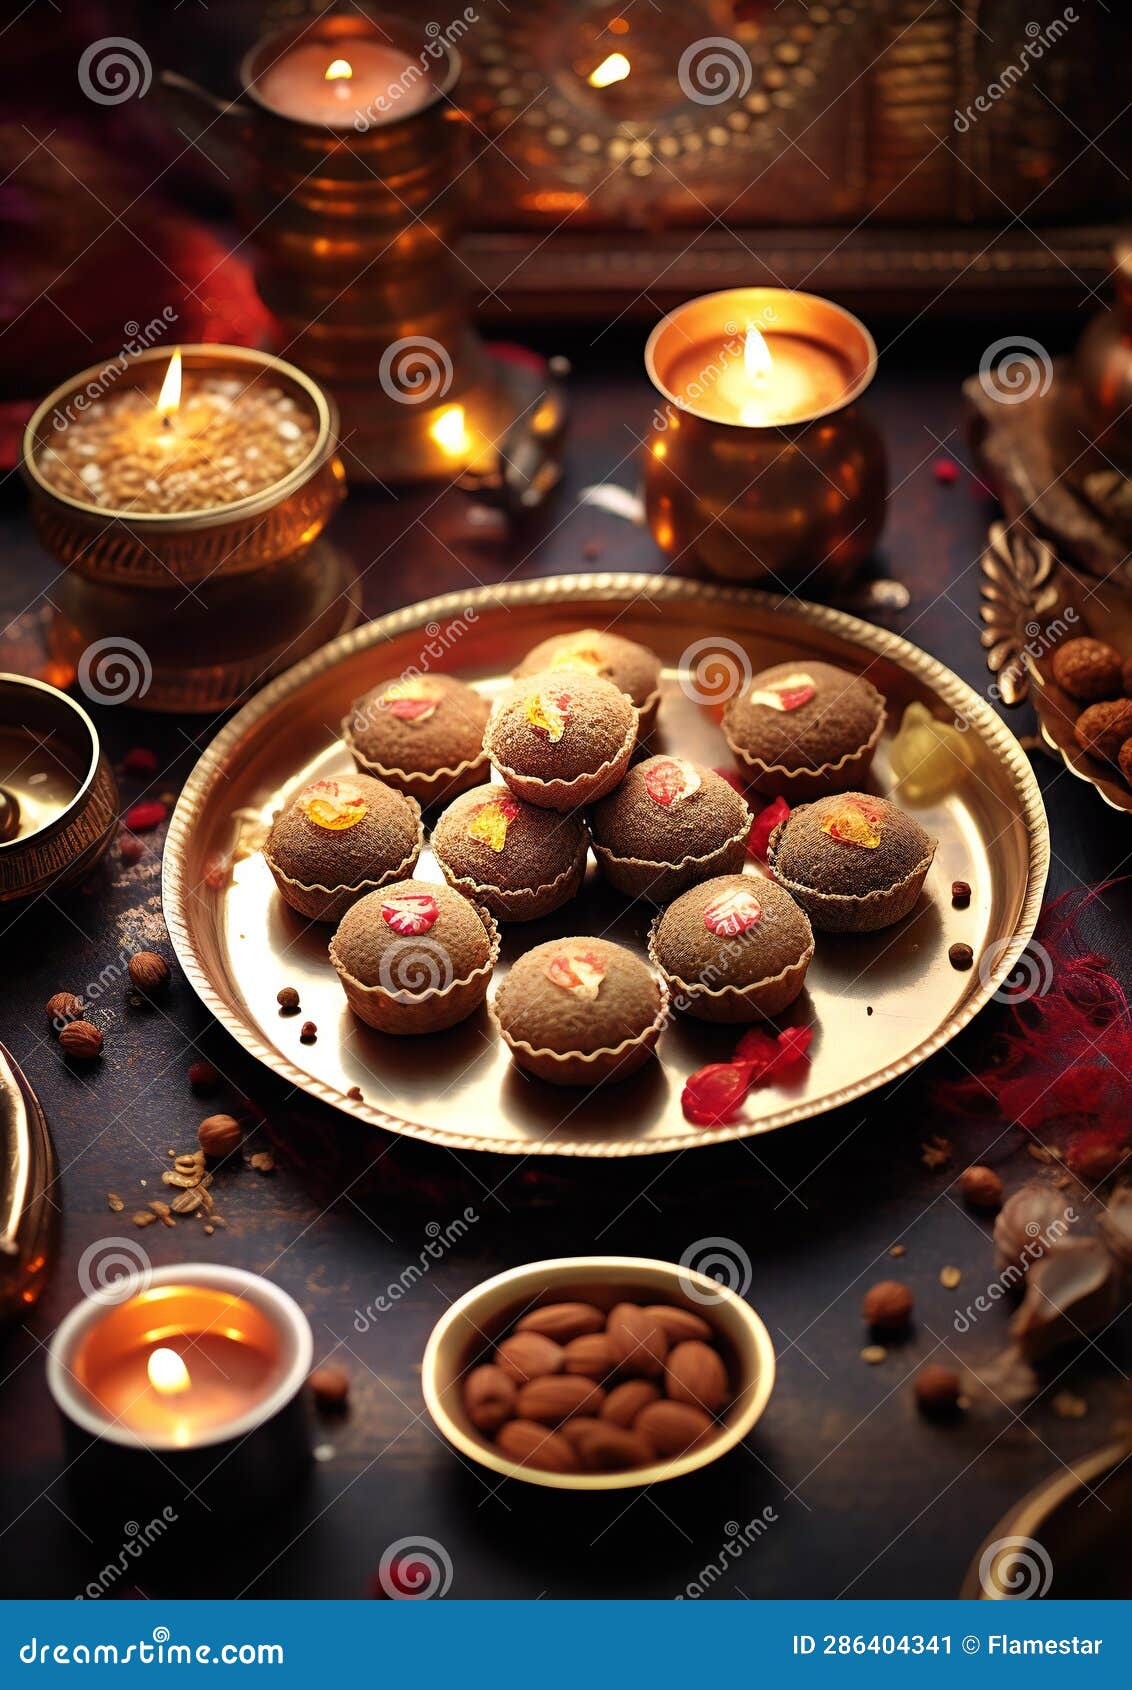 the customary pooja prayer ceremony on diwali festival lights